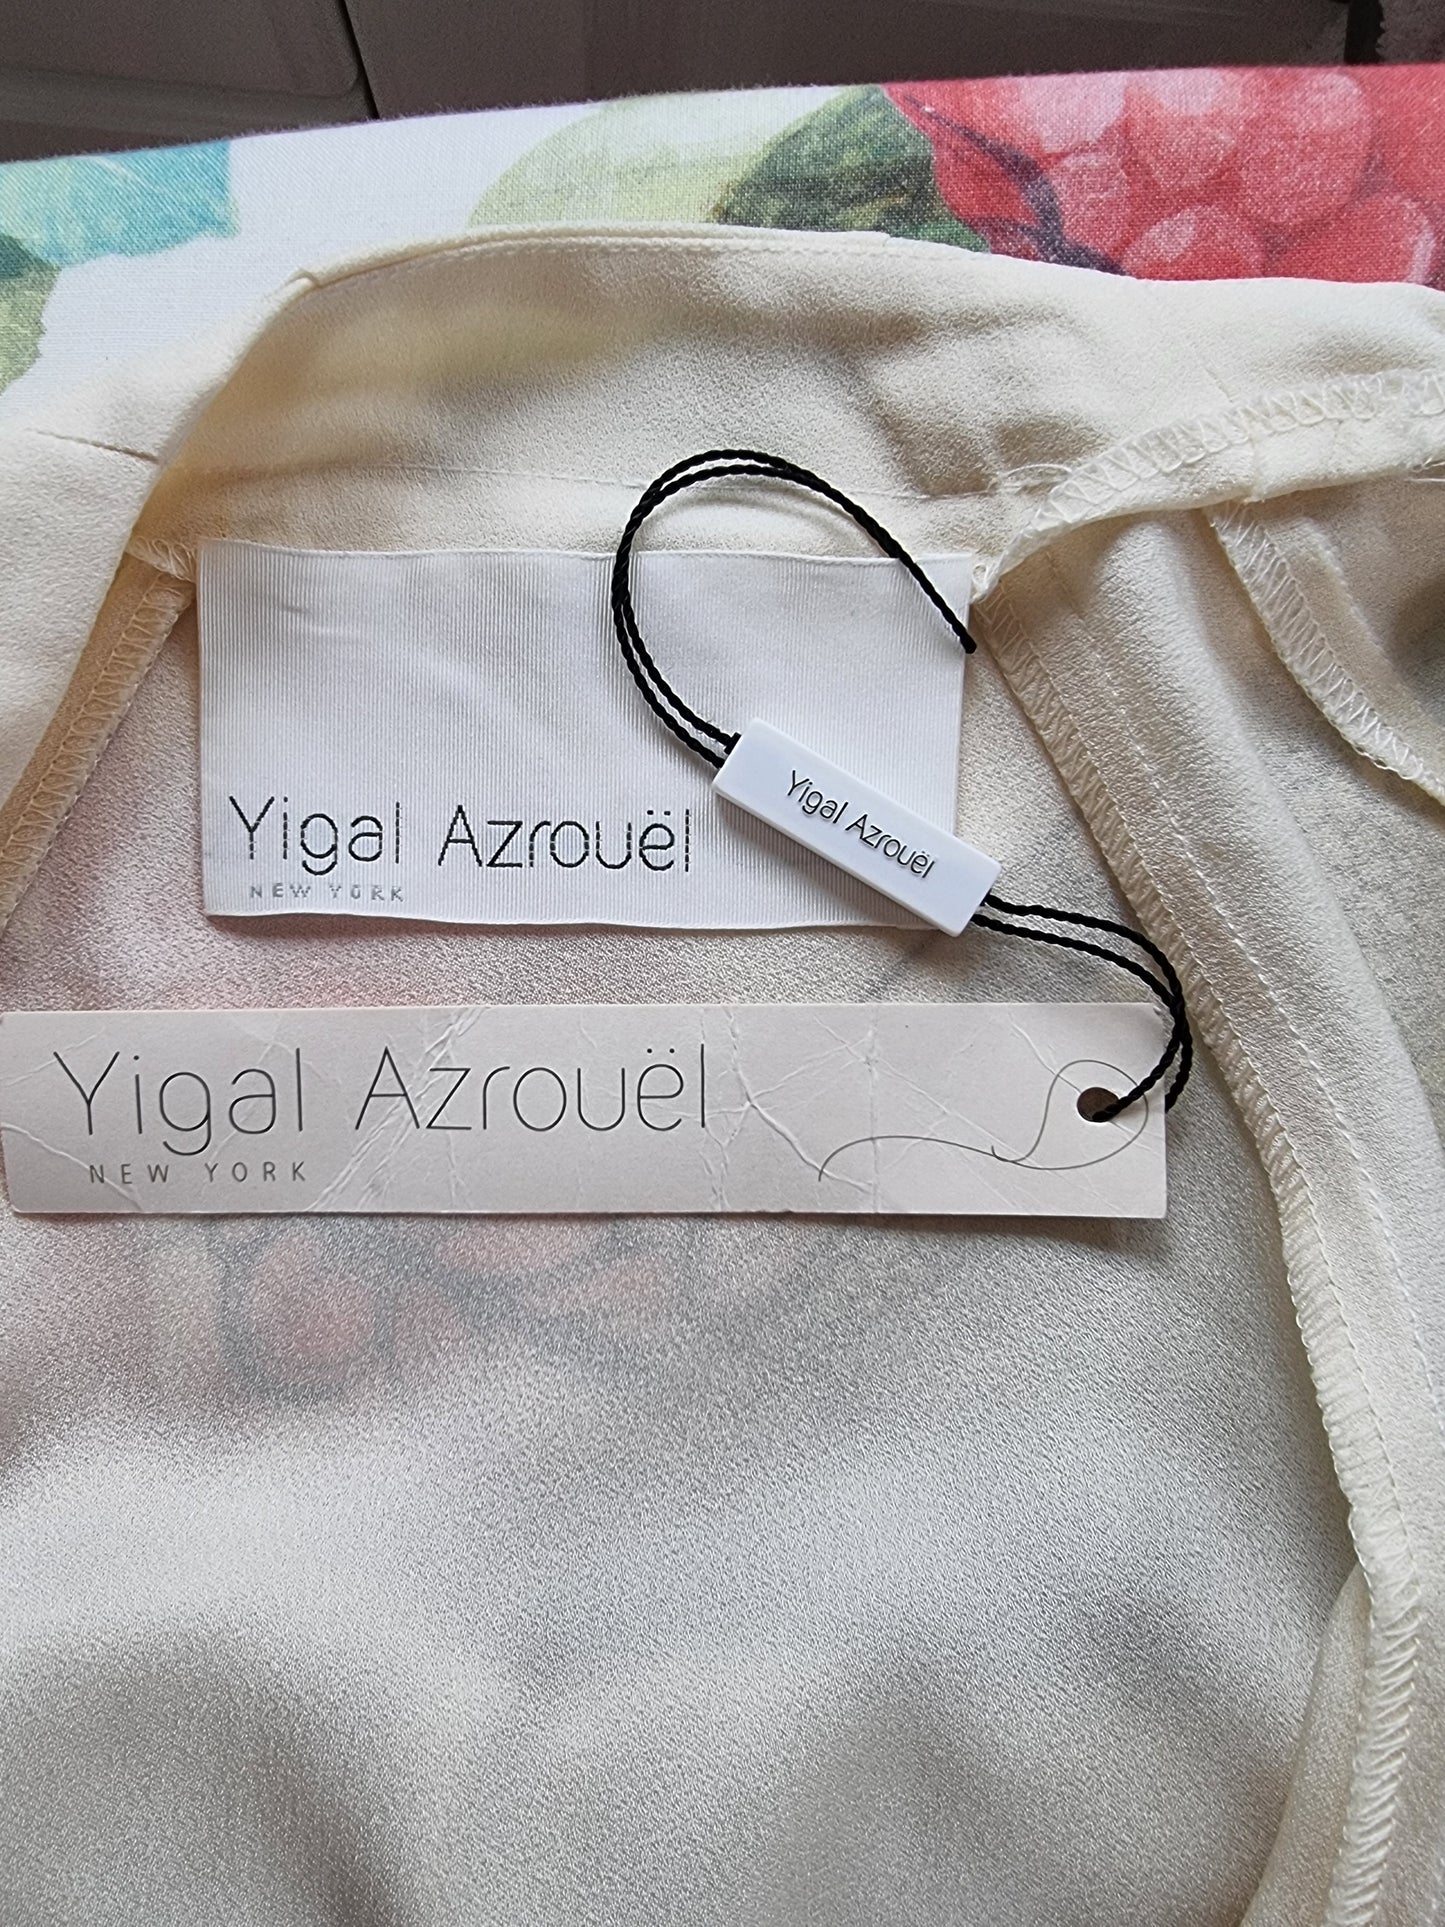 Yigal Azrouël Black & Cream Crossover Ruched Pencil Dress UK 6 US 2 EU 34 BNWT Timeless Fashions